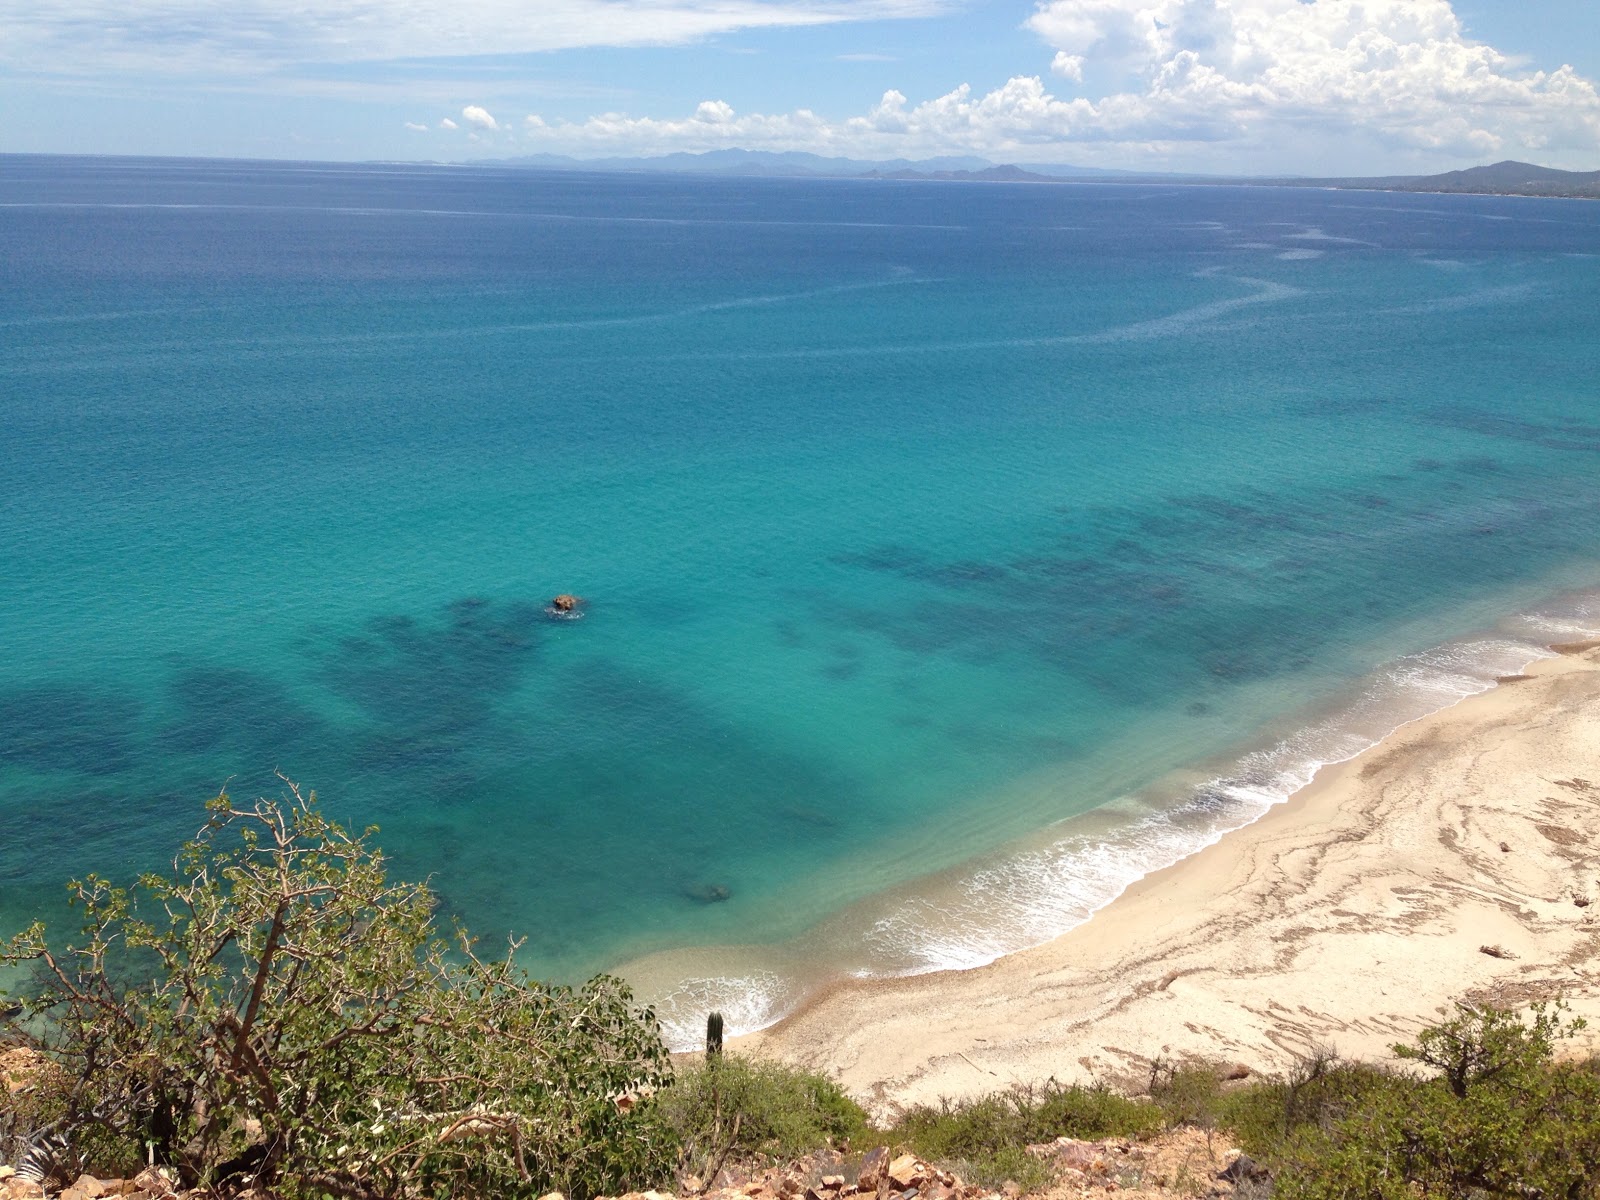 Playa Palo Blanquito'in fotoğrafı geniş plaj ile birlikte